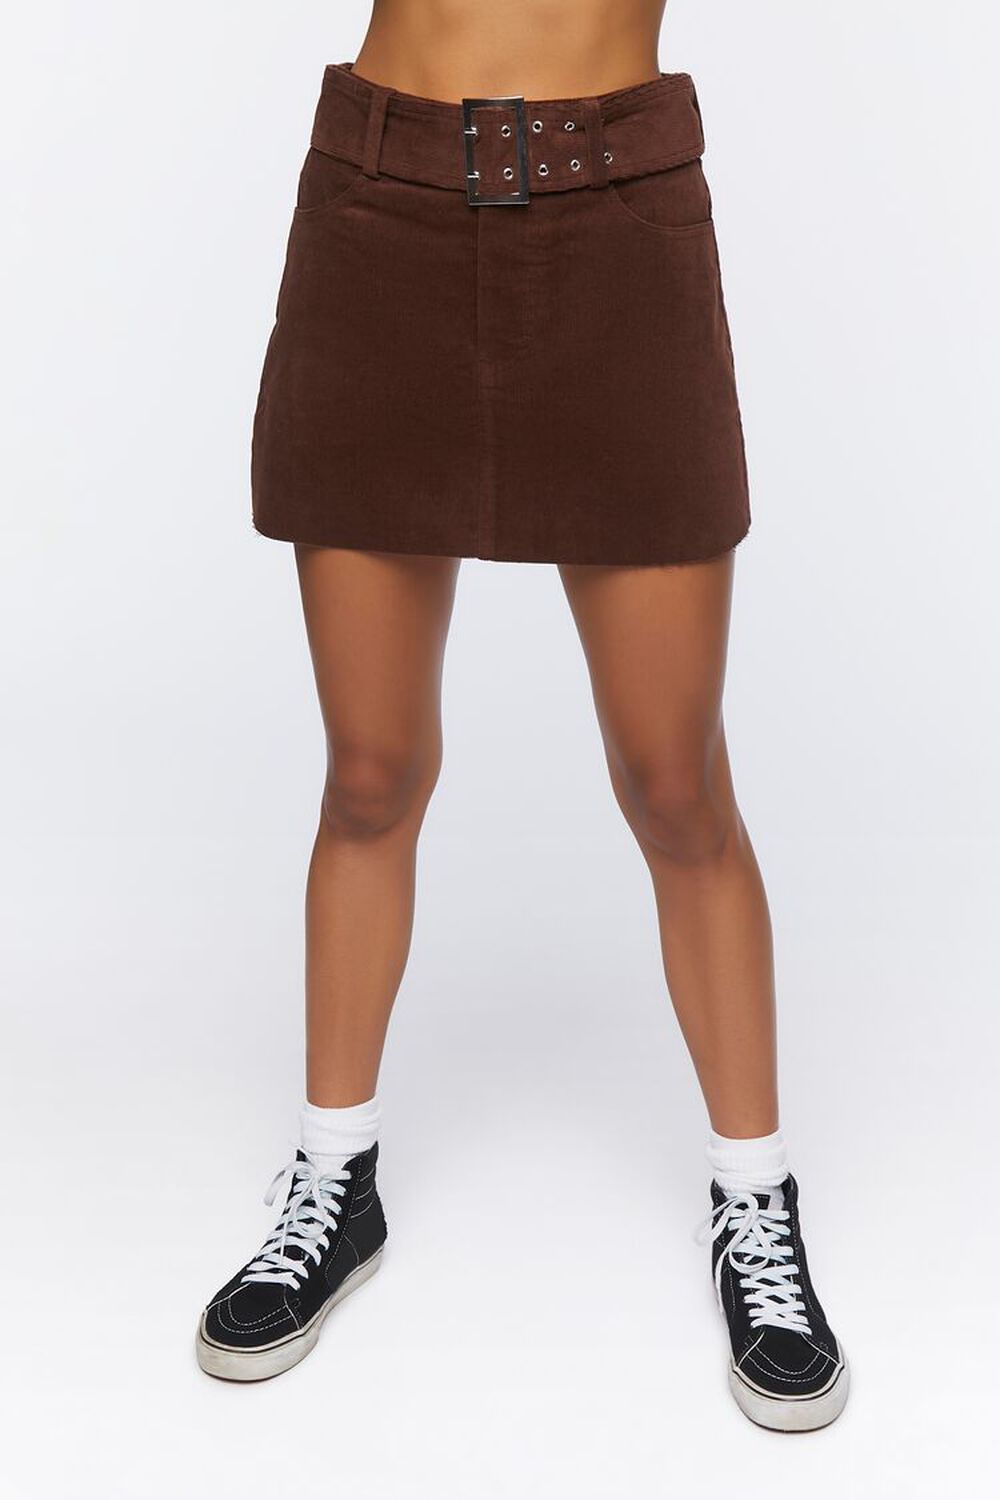 CHOCOLATE Belted Mini Skirt, image 2